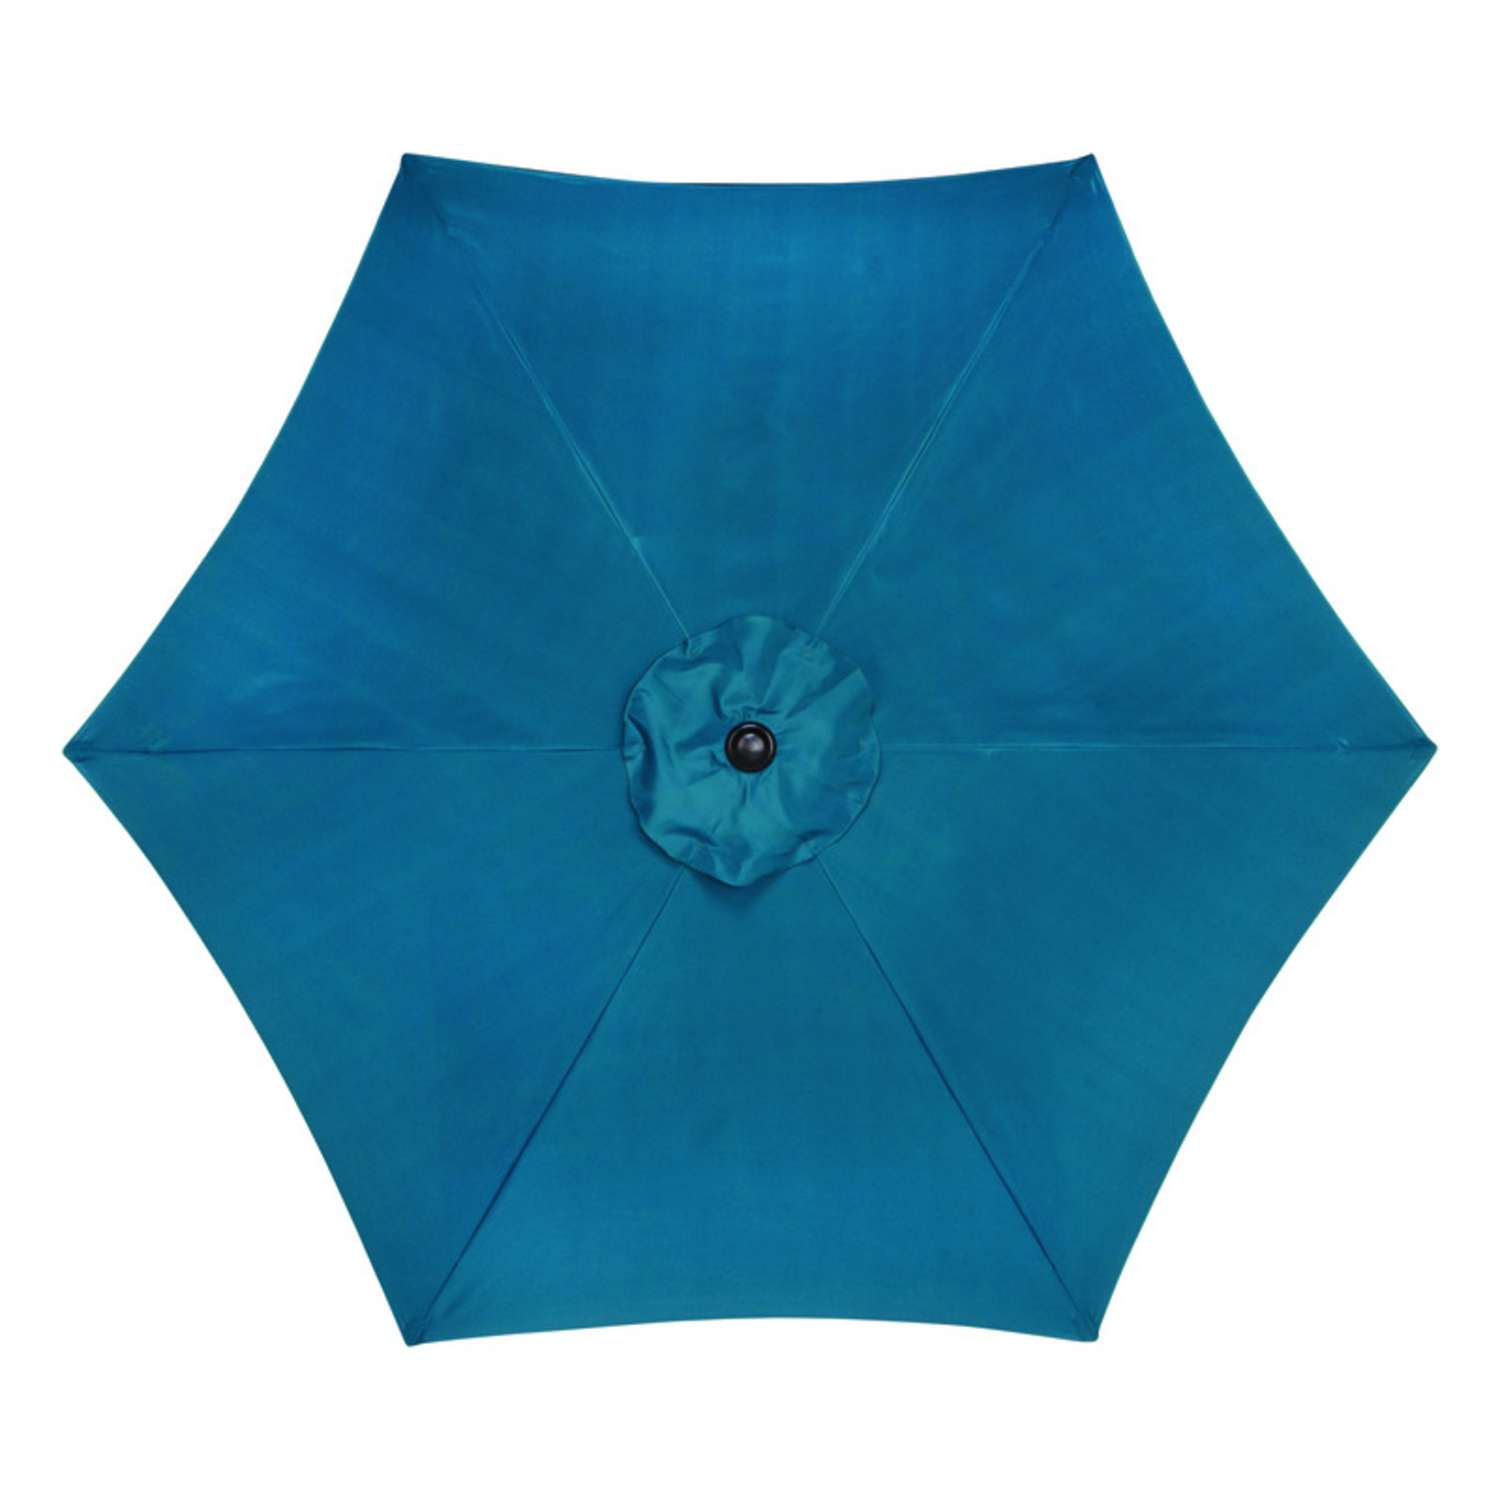 Tiffany&Co Blue Umbrella Dome Walking Stick Employee Gift